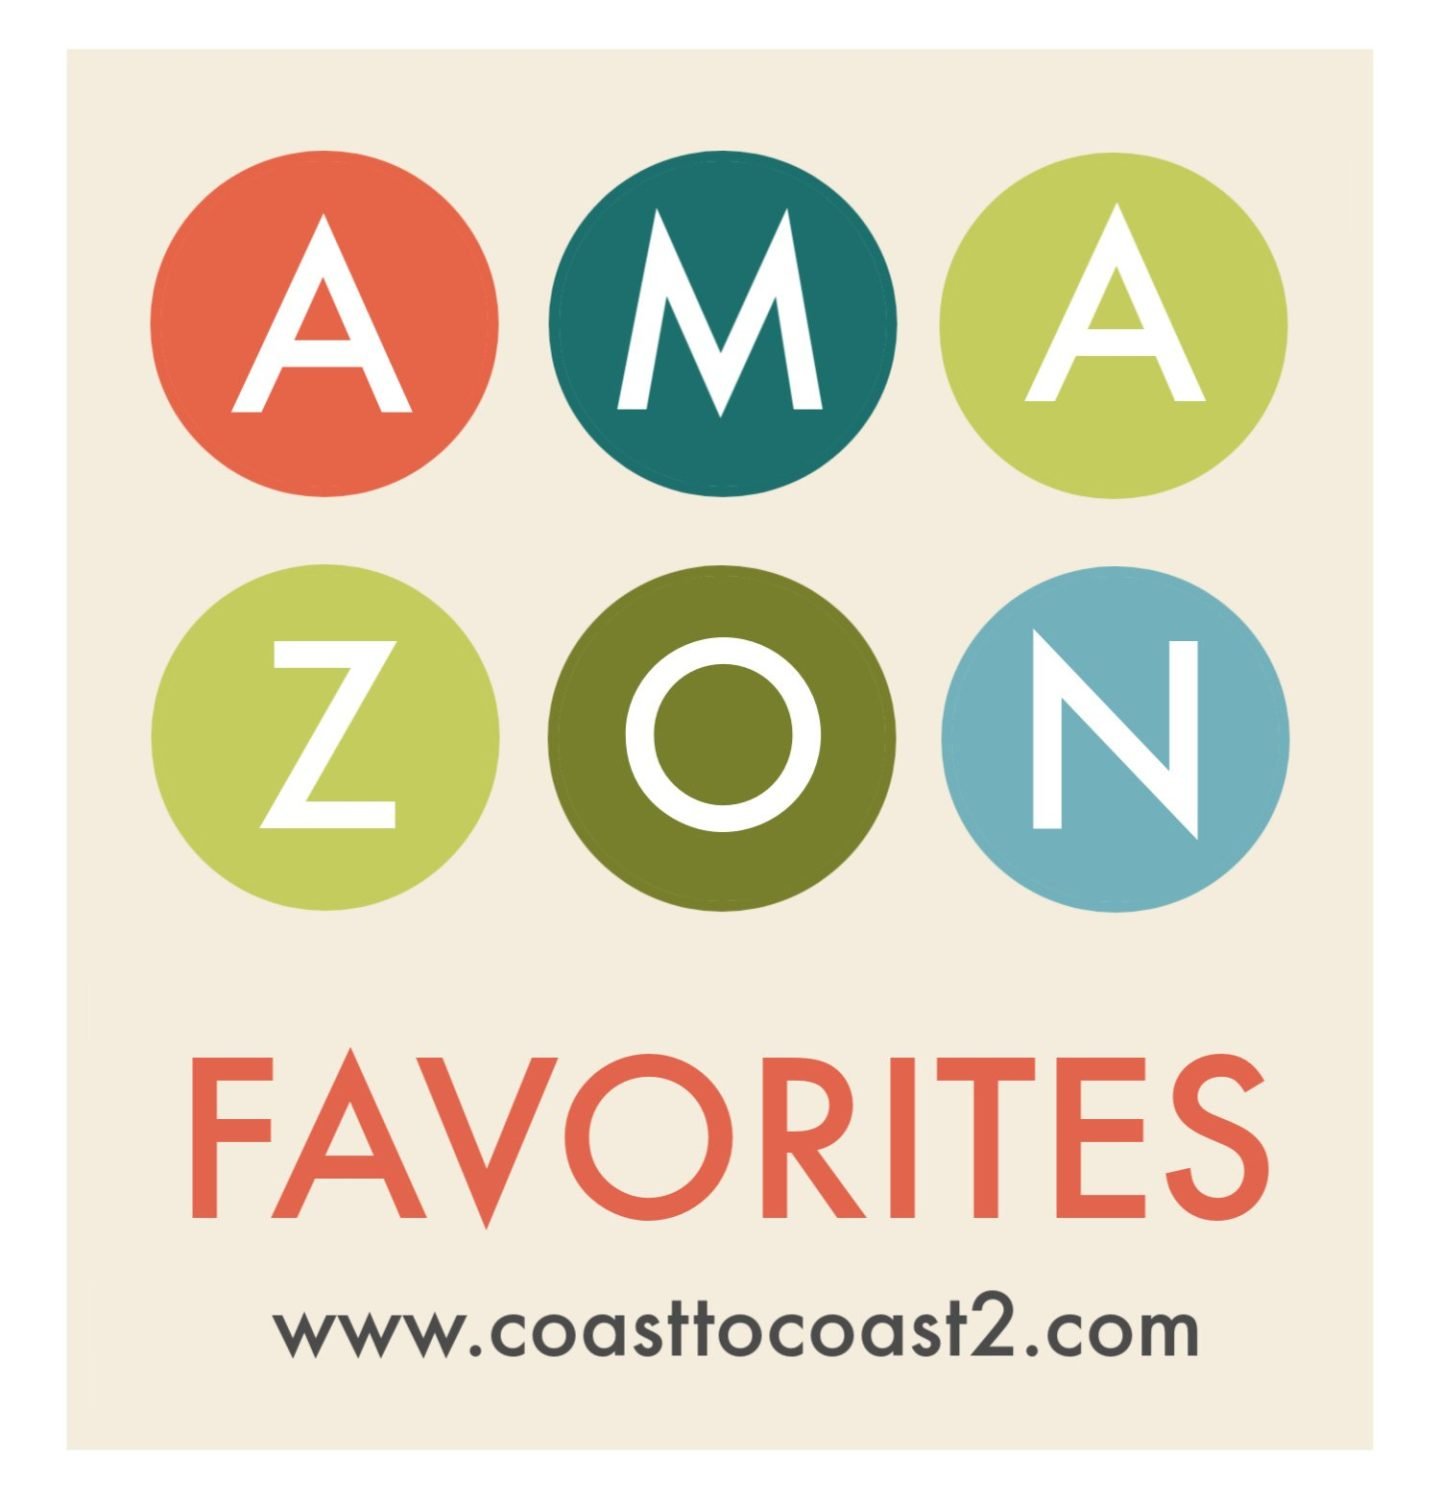 Amazon Favorites #1